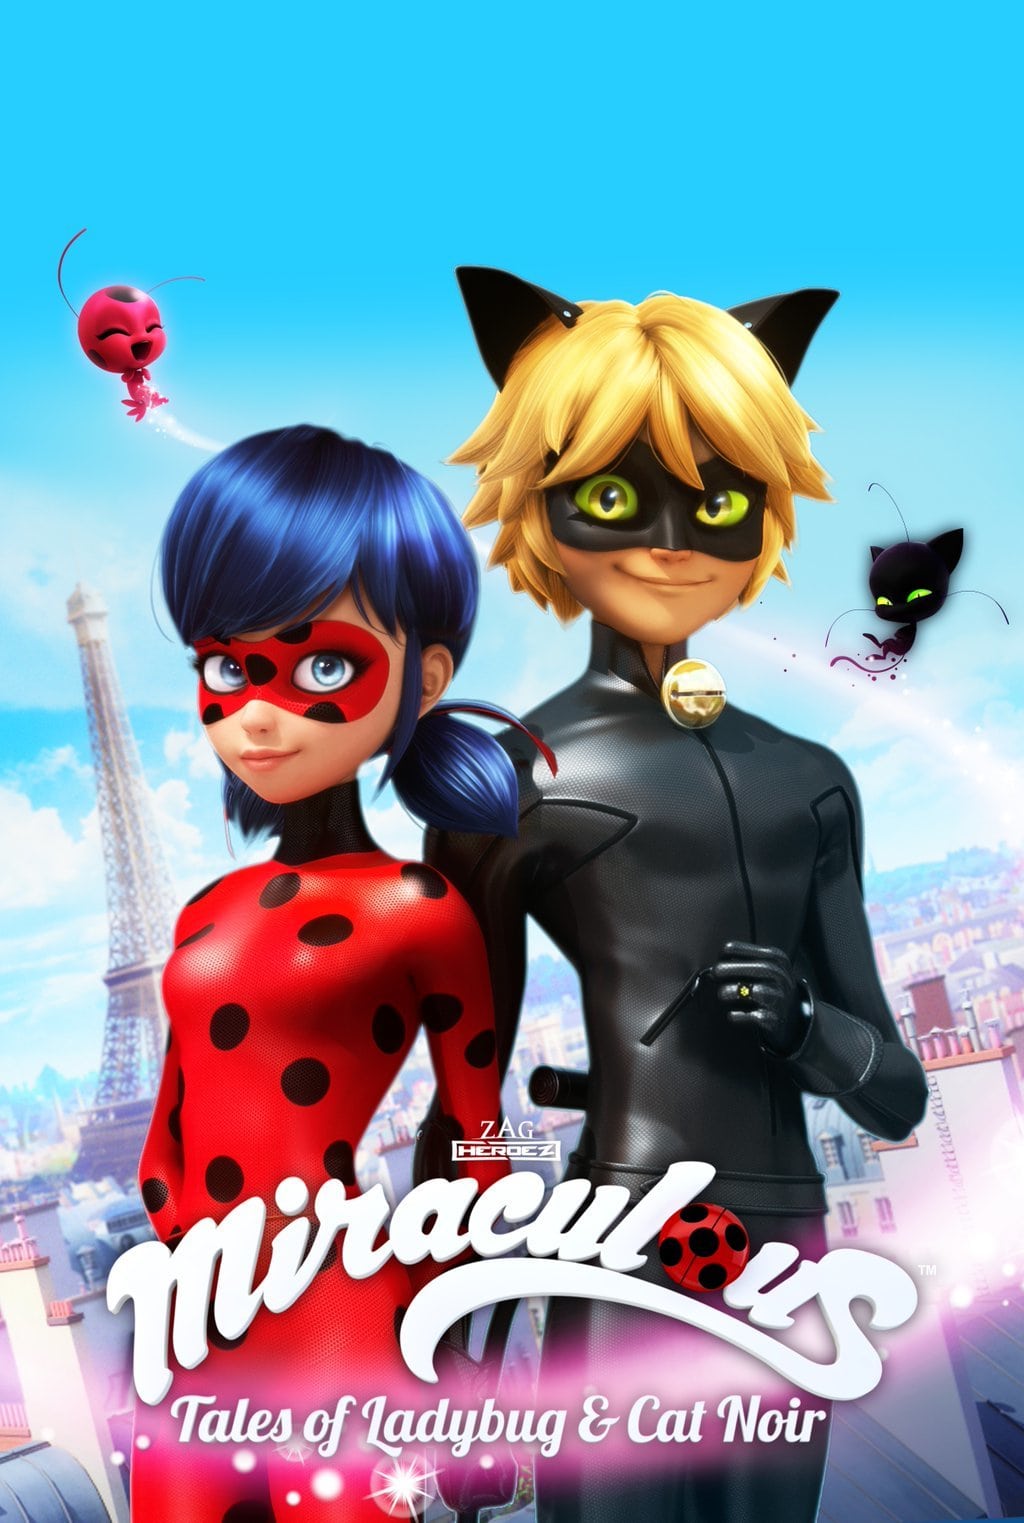 Miraculous Br: Vamos Falar do Anime de Ladybug? #1